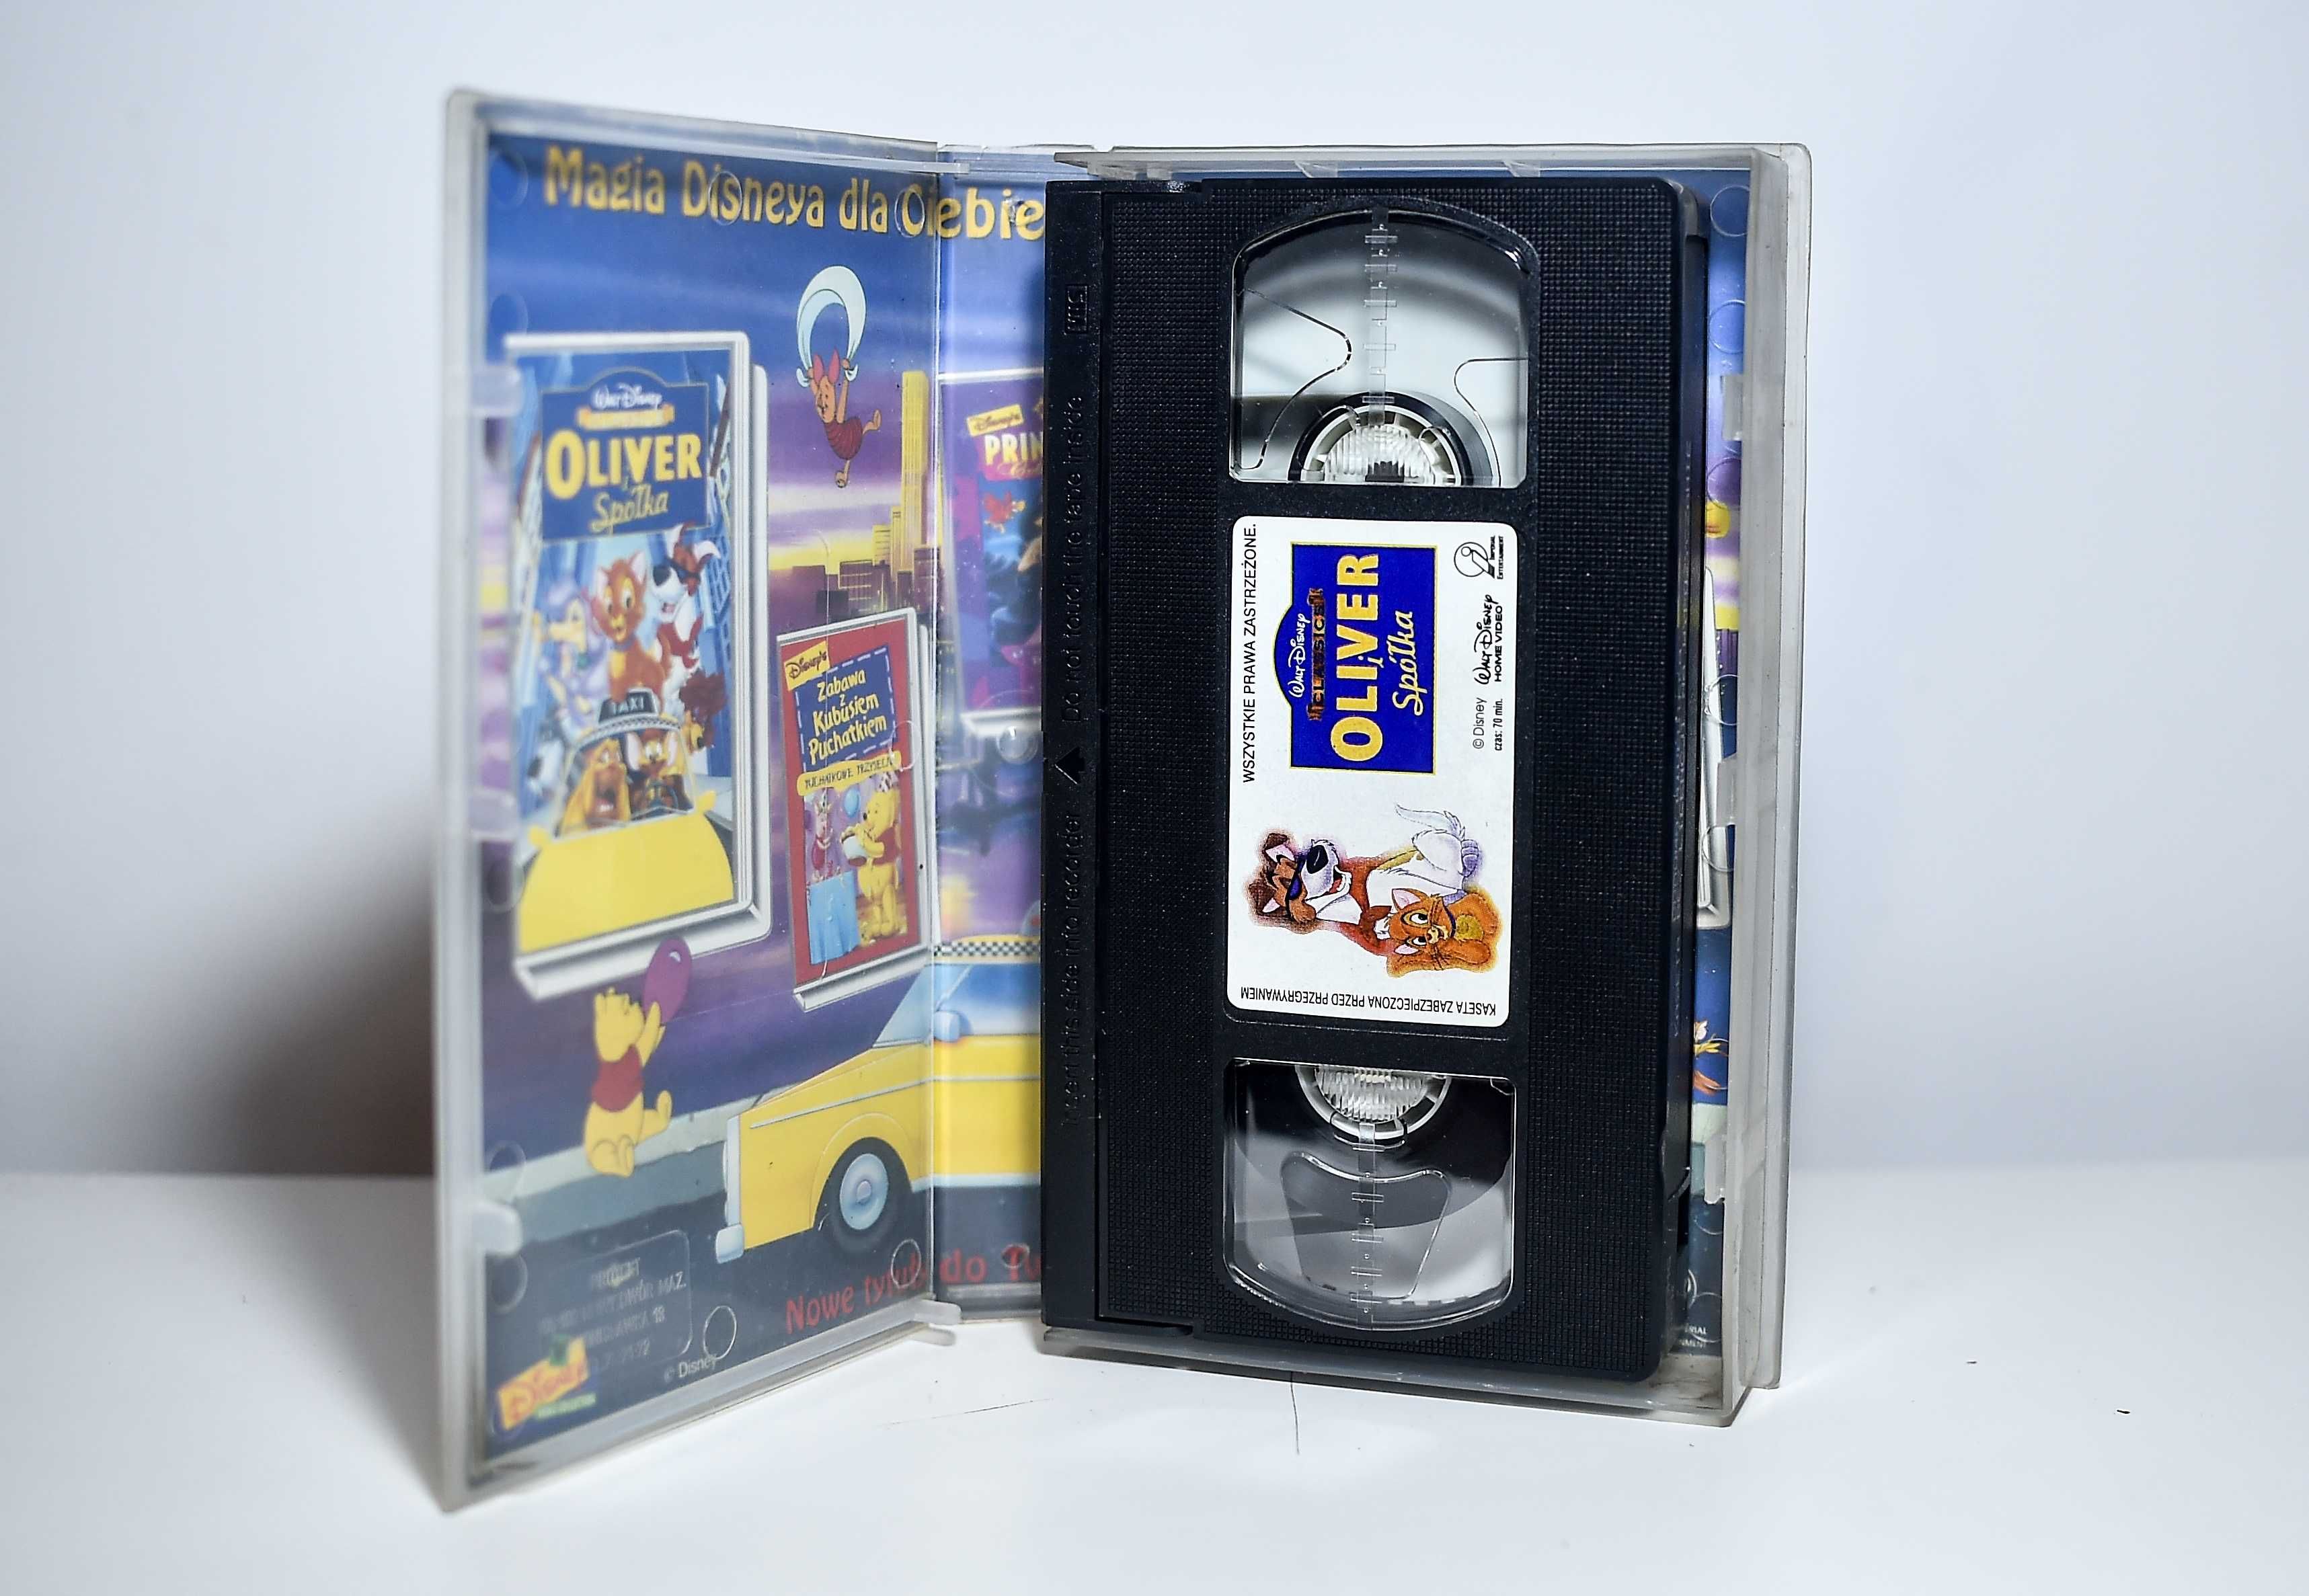 VHS # Disney - Oliver i Spółka